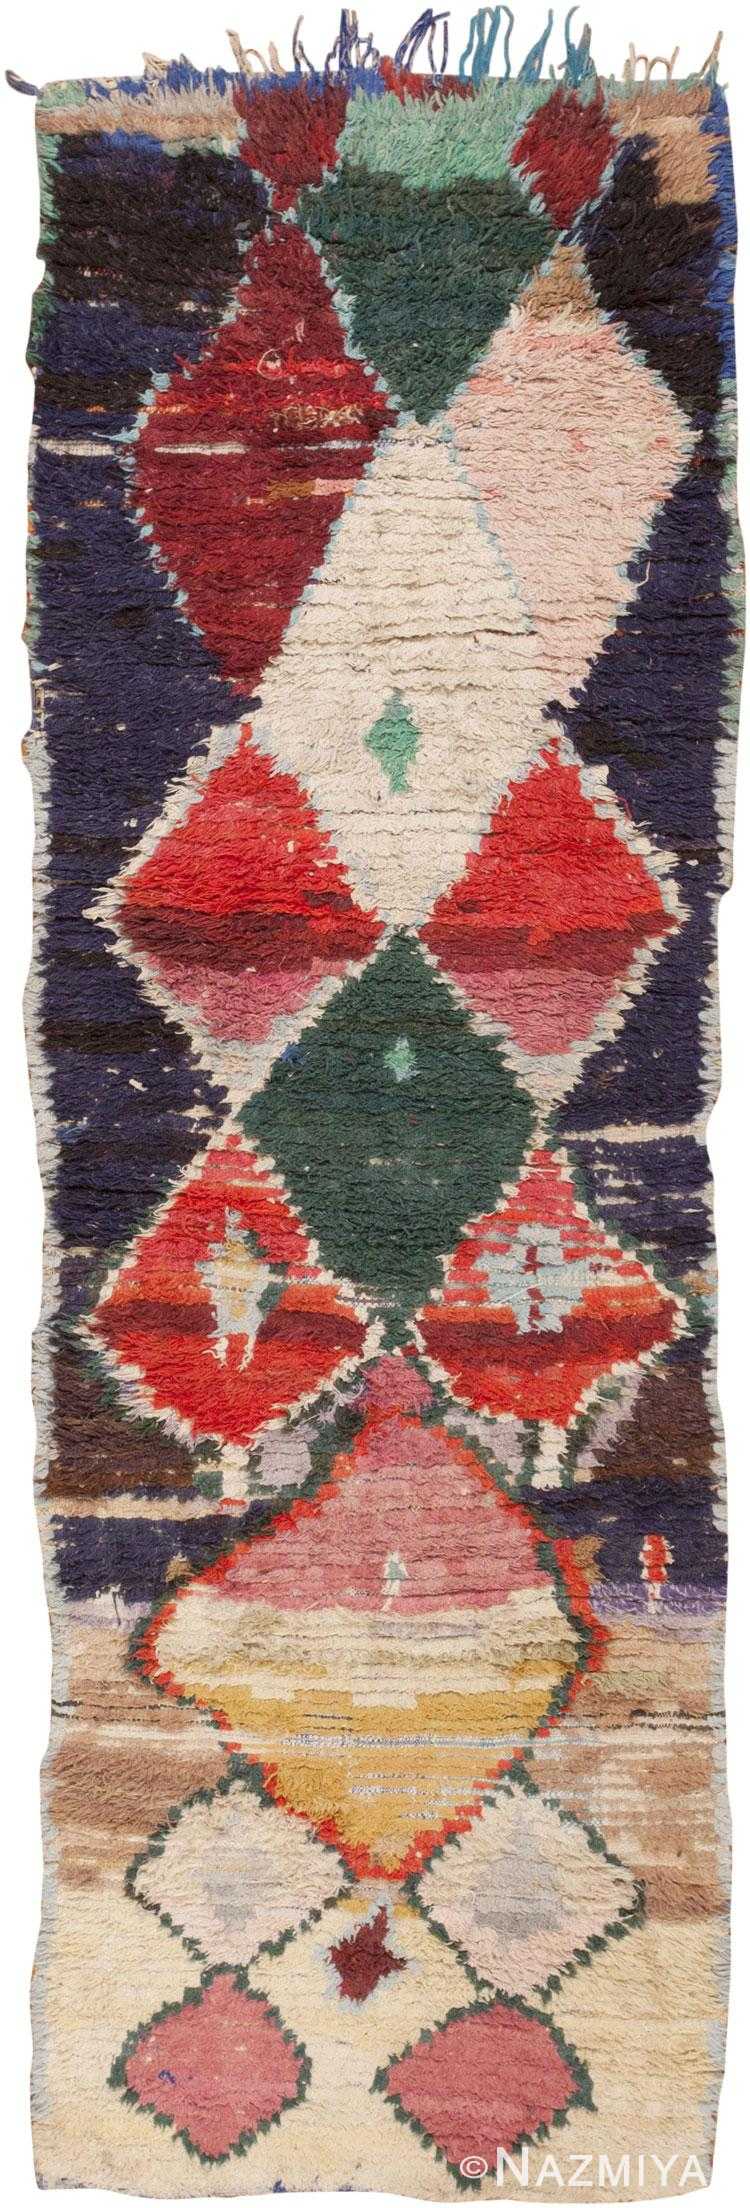 Vintage Moroccan Rug 45707 Detail/Large View